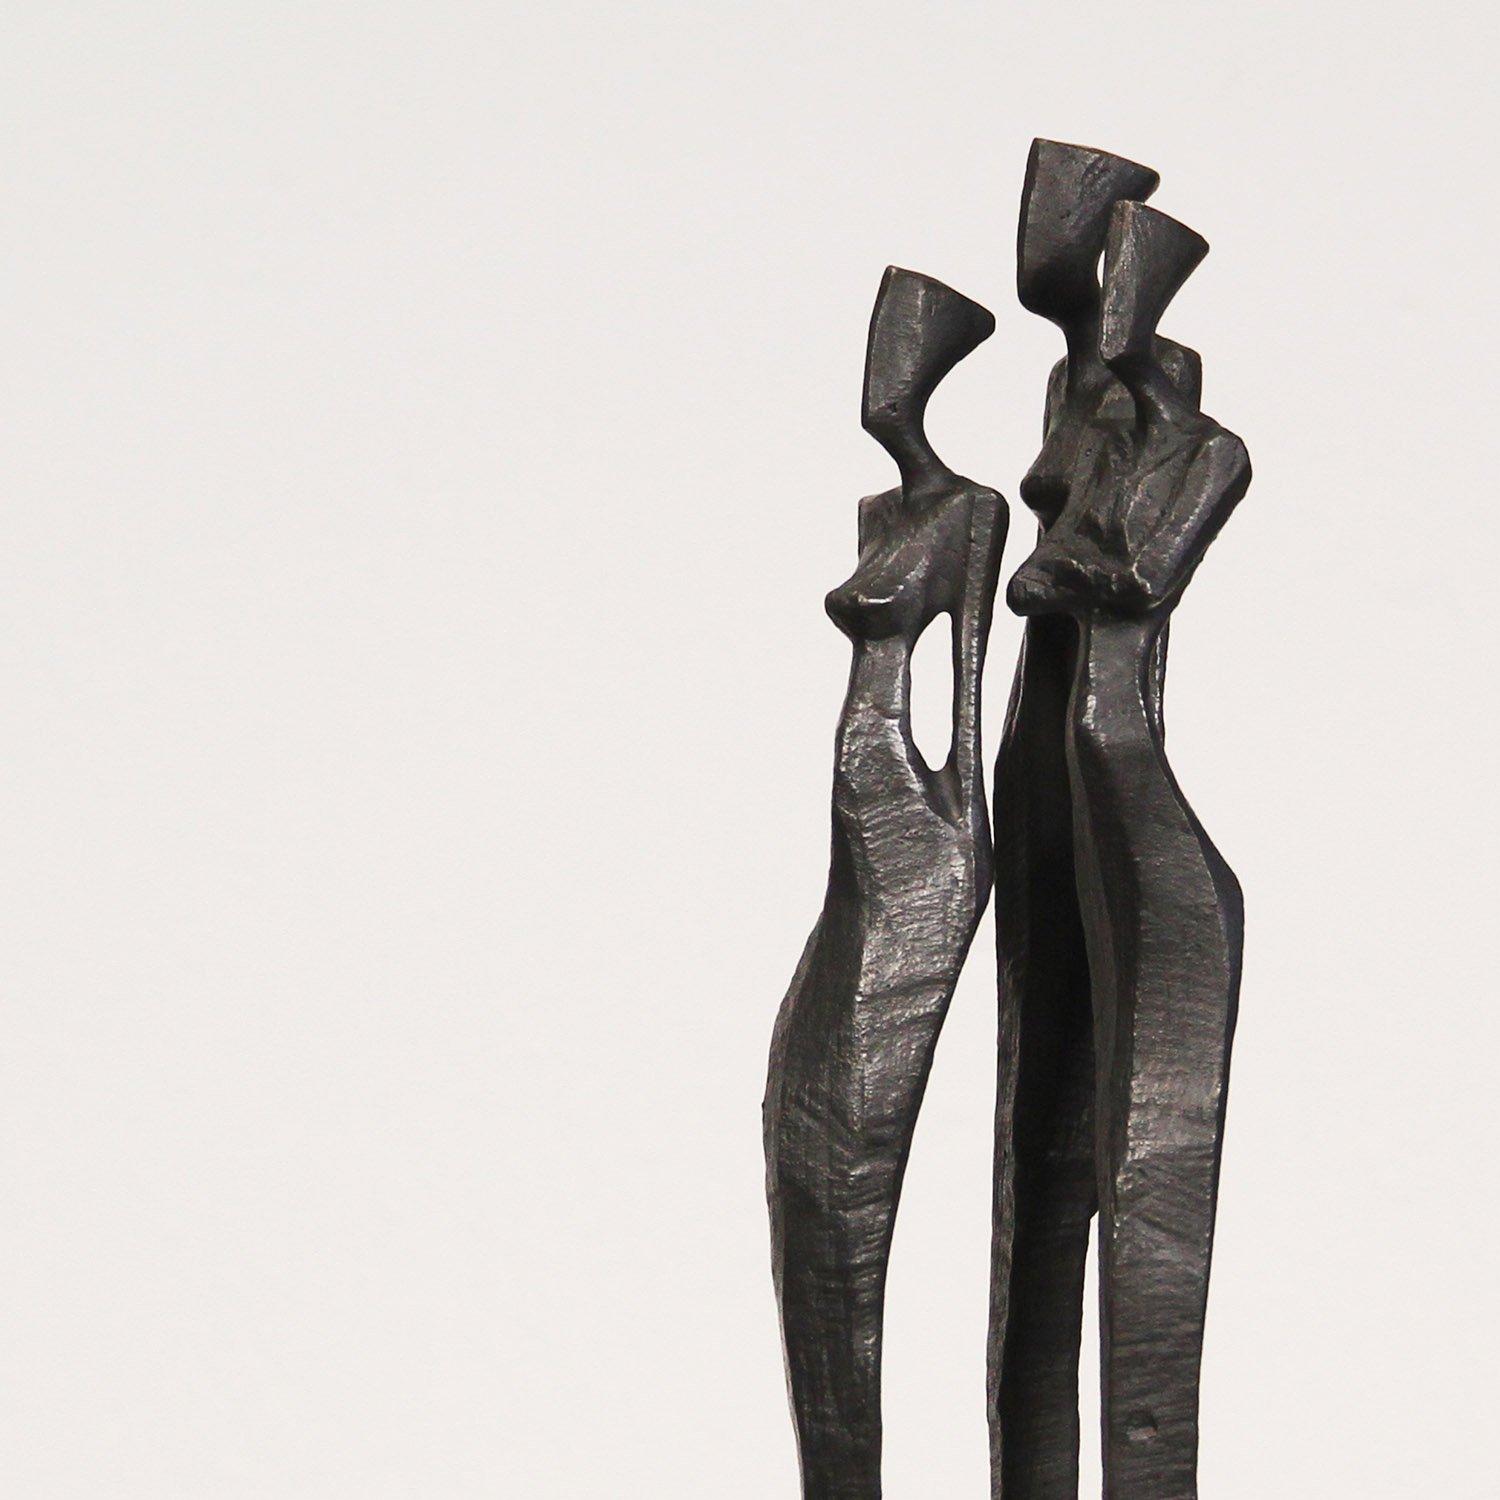 Donne V by Nando Kallweit 
Elegant bronze sculpture of 3 female figures.
Edition of 25

Dimensions: 26 x 19 x 7cm